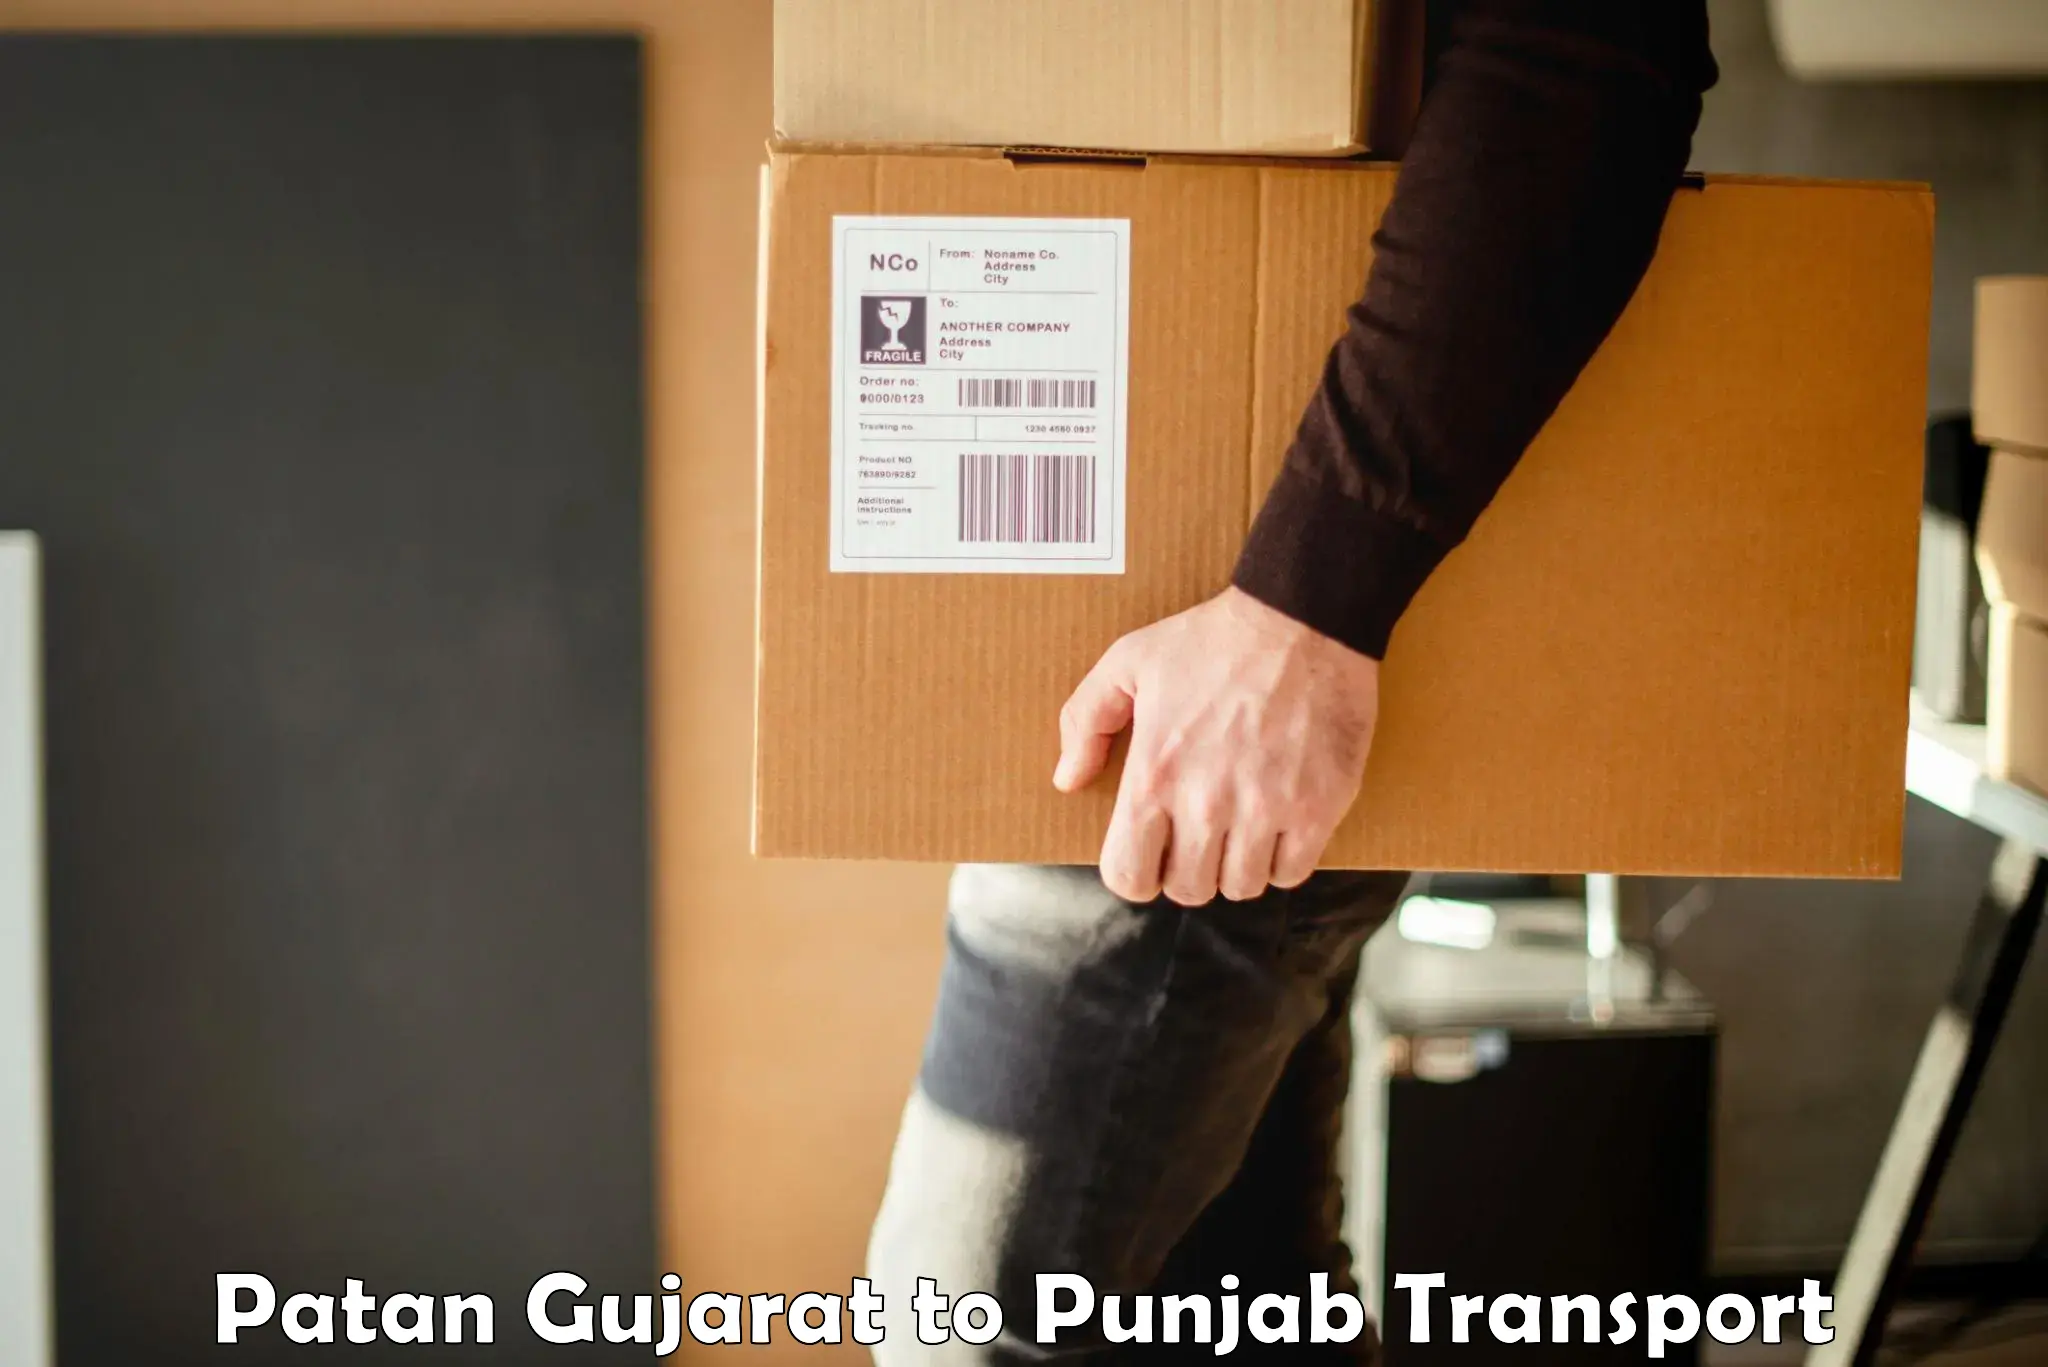 Daily transport service Patan Gujarat to Kotkapura